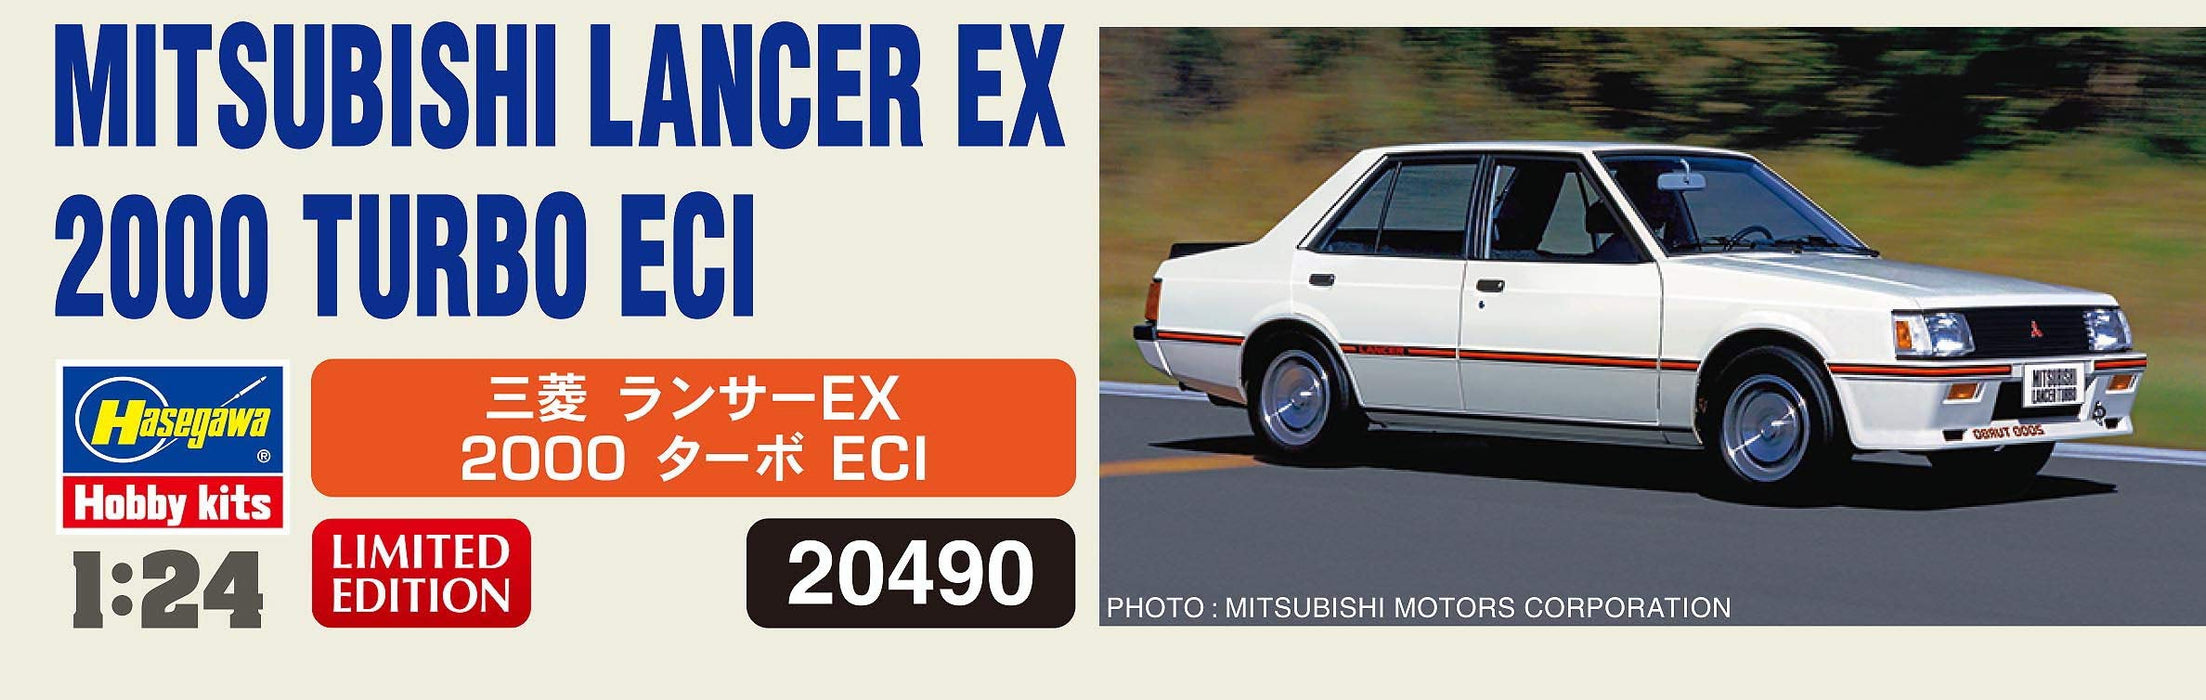 Hasegawa 1/24 Mitsubishi Lancer Ex 2000 Turbo Eci, japanische klassische Automodelle